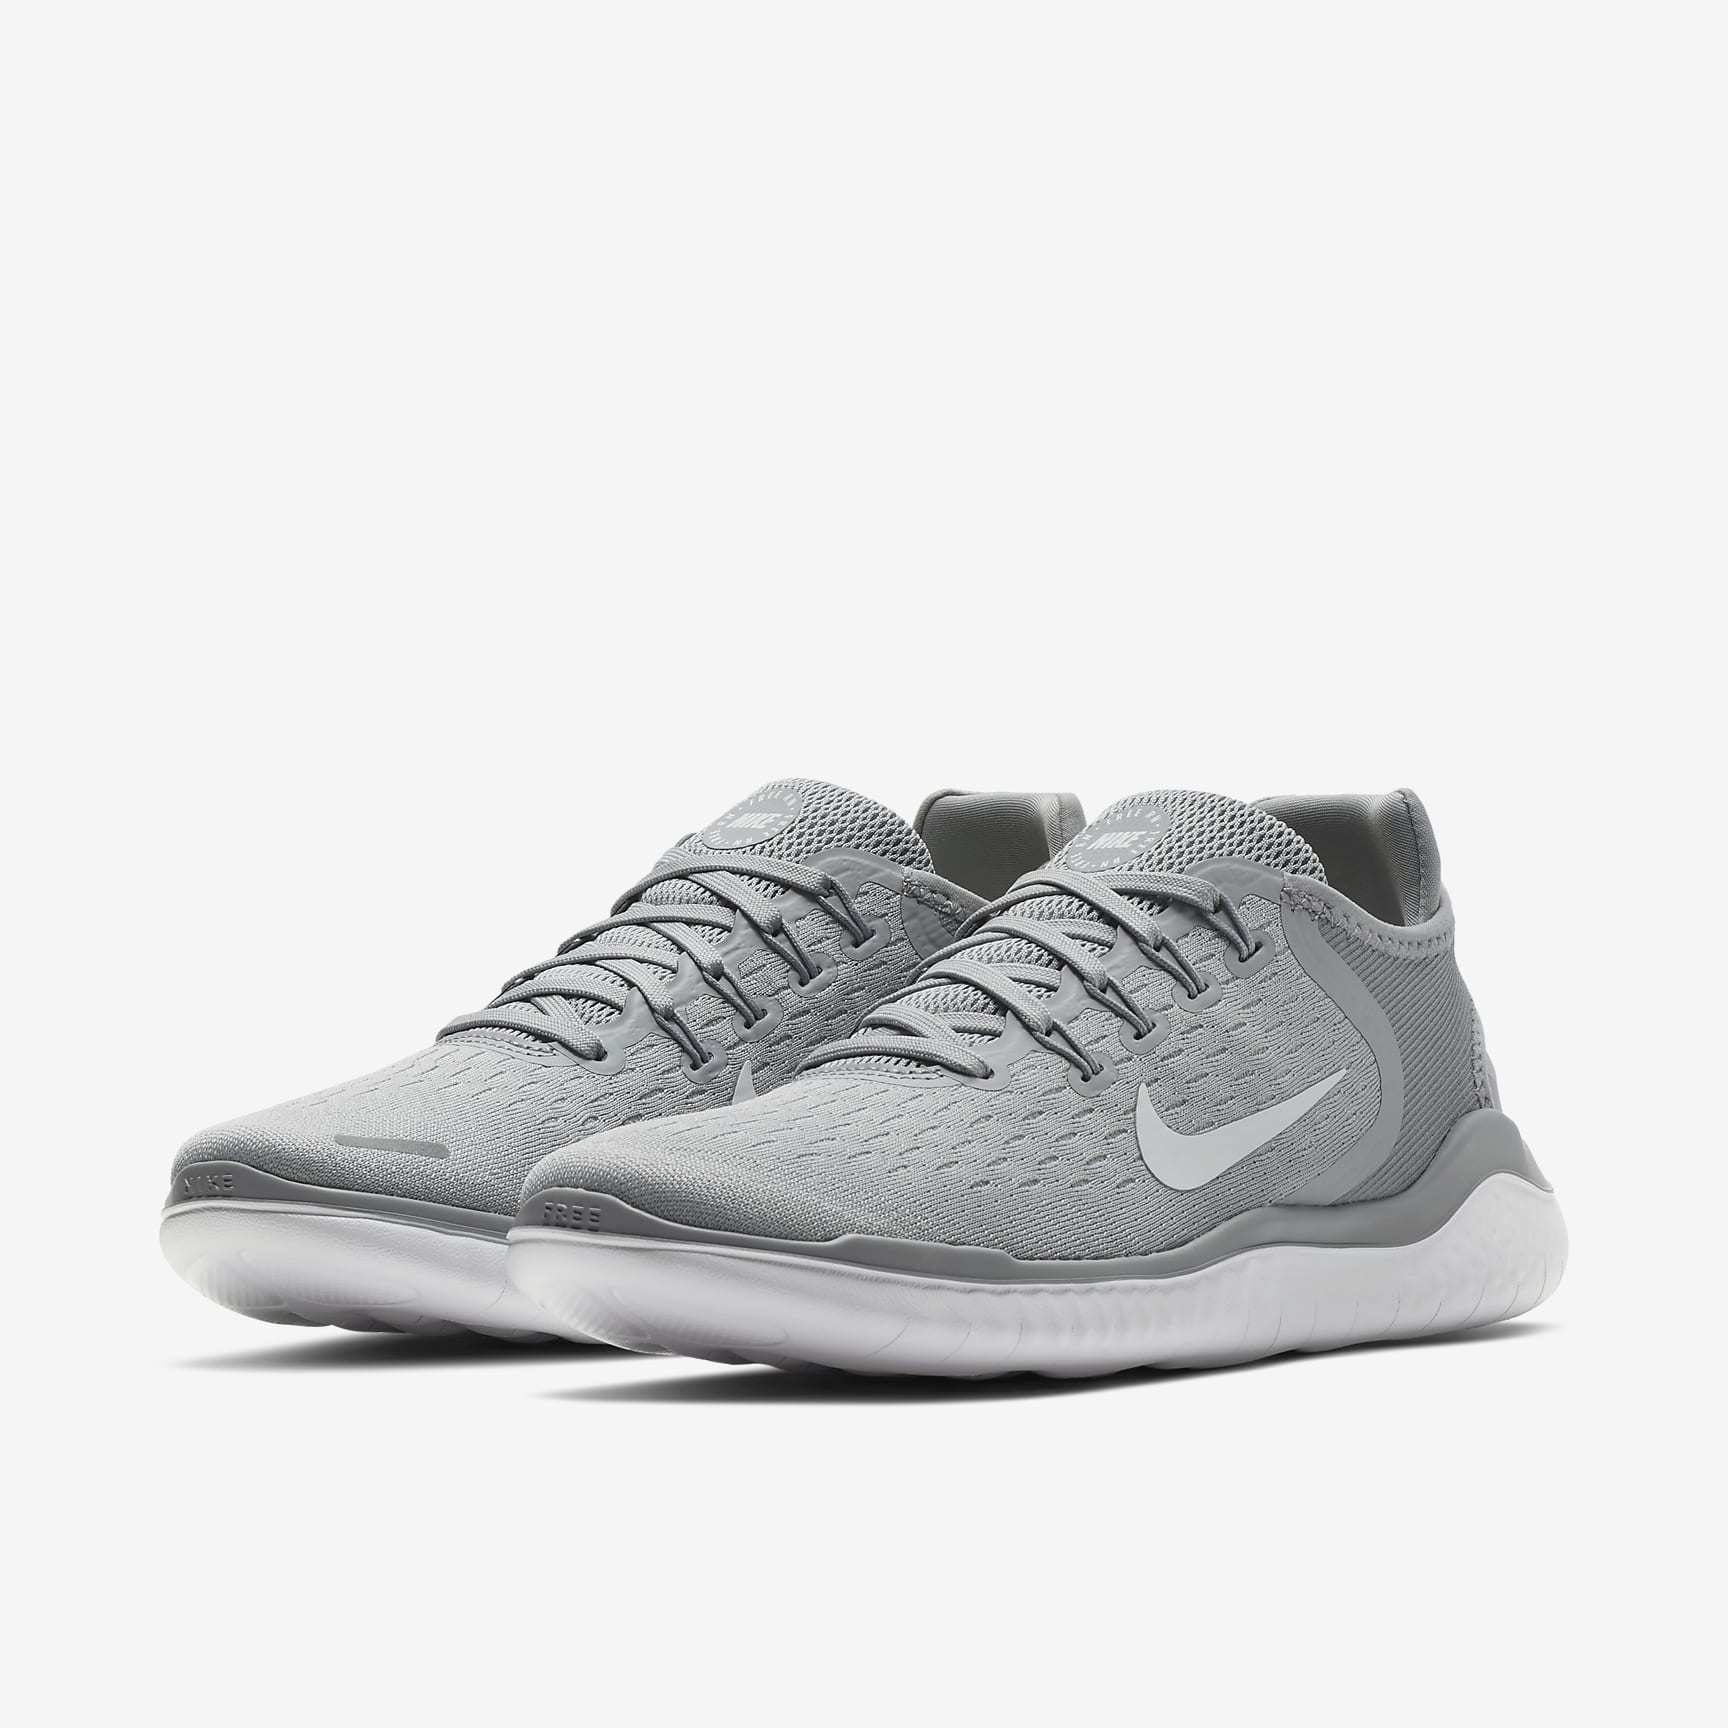 Nike Free RN 2018 Women's Running Shoes - Wolf Grey/White/Volt/White